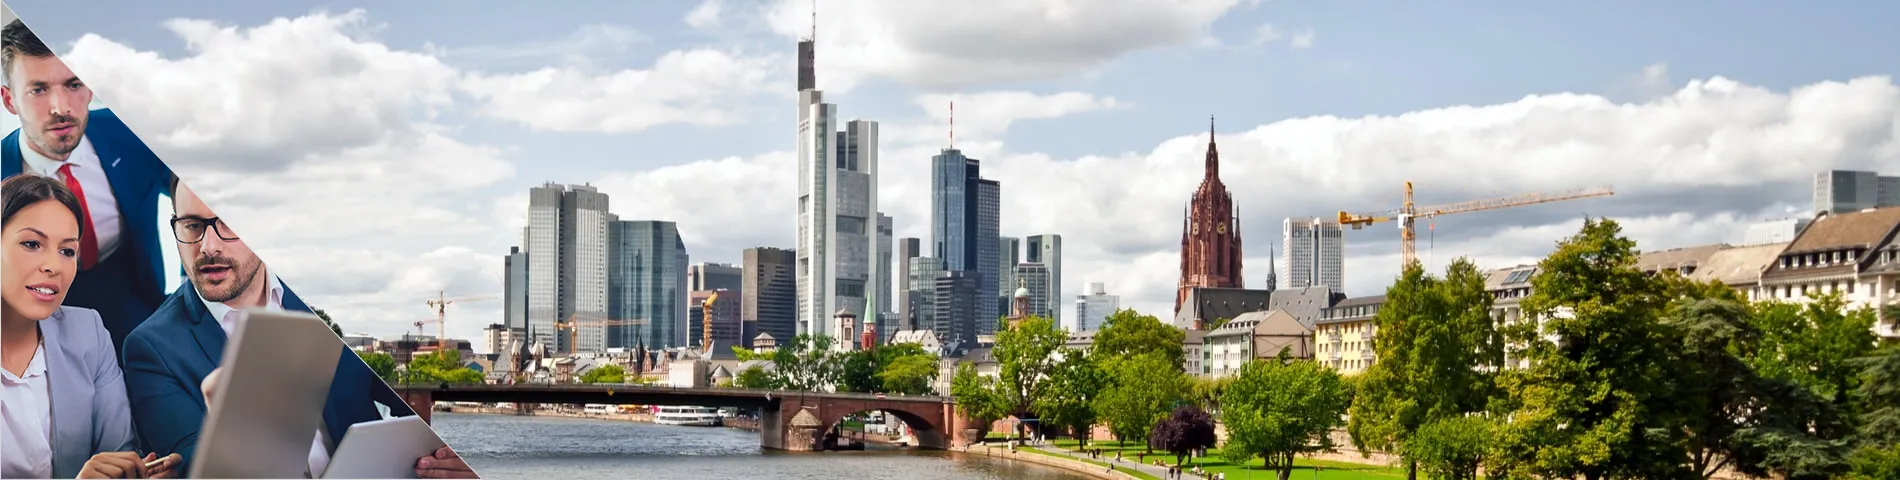 Frankfurt - 